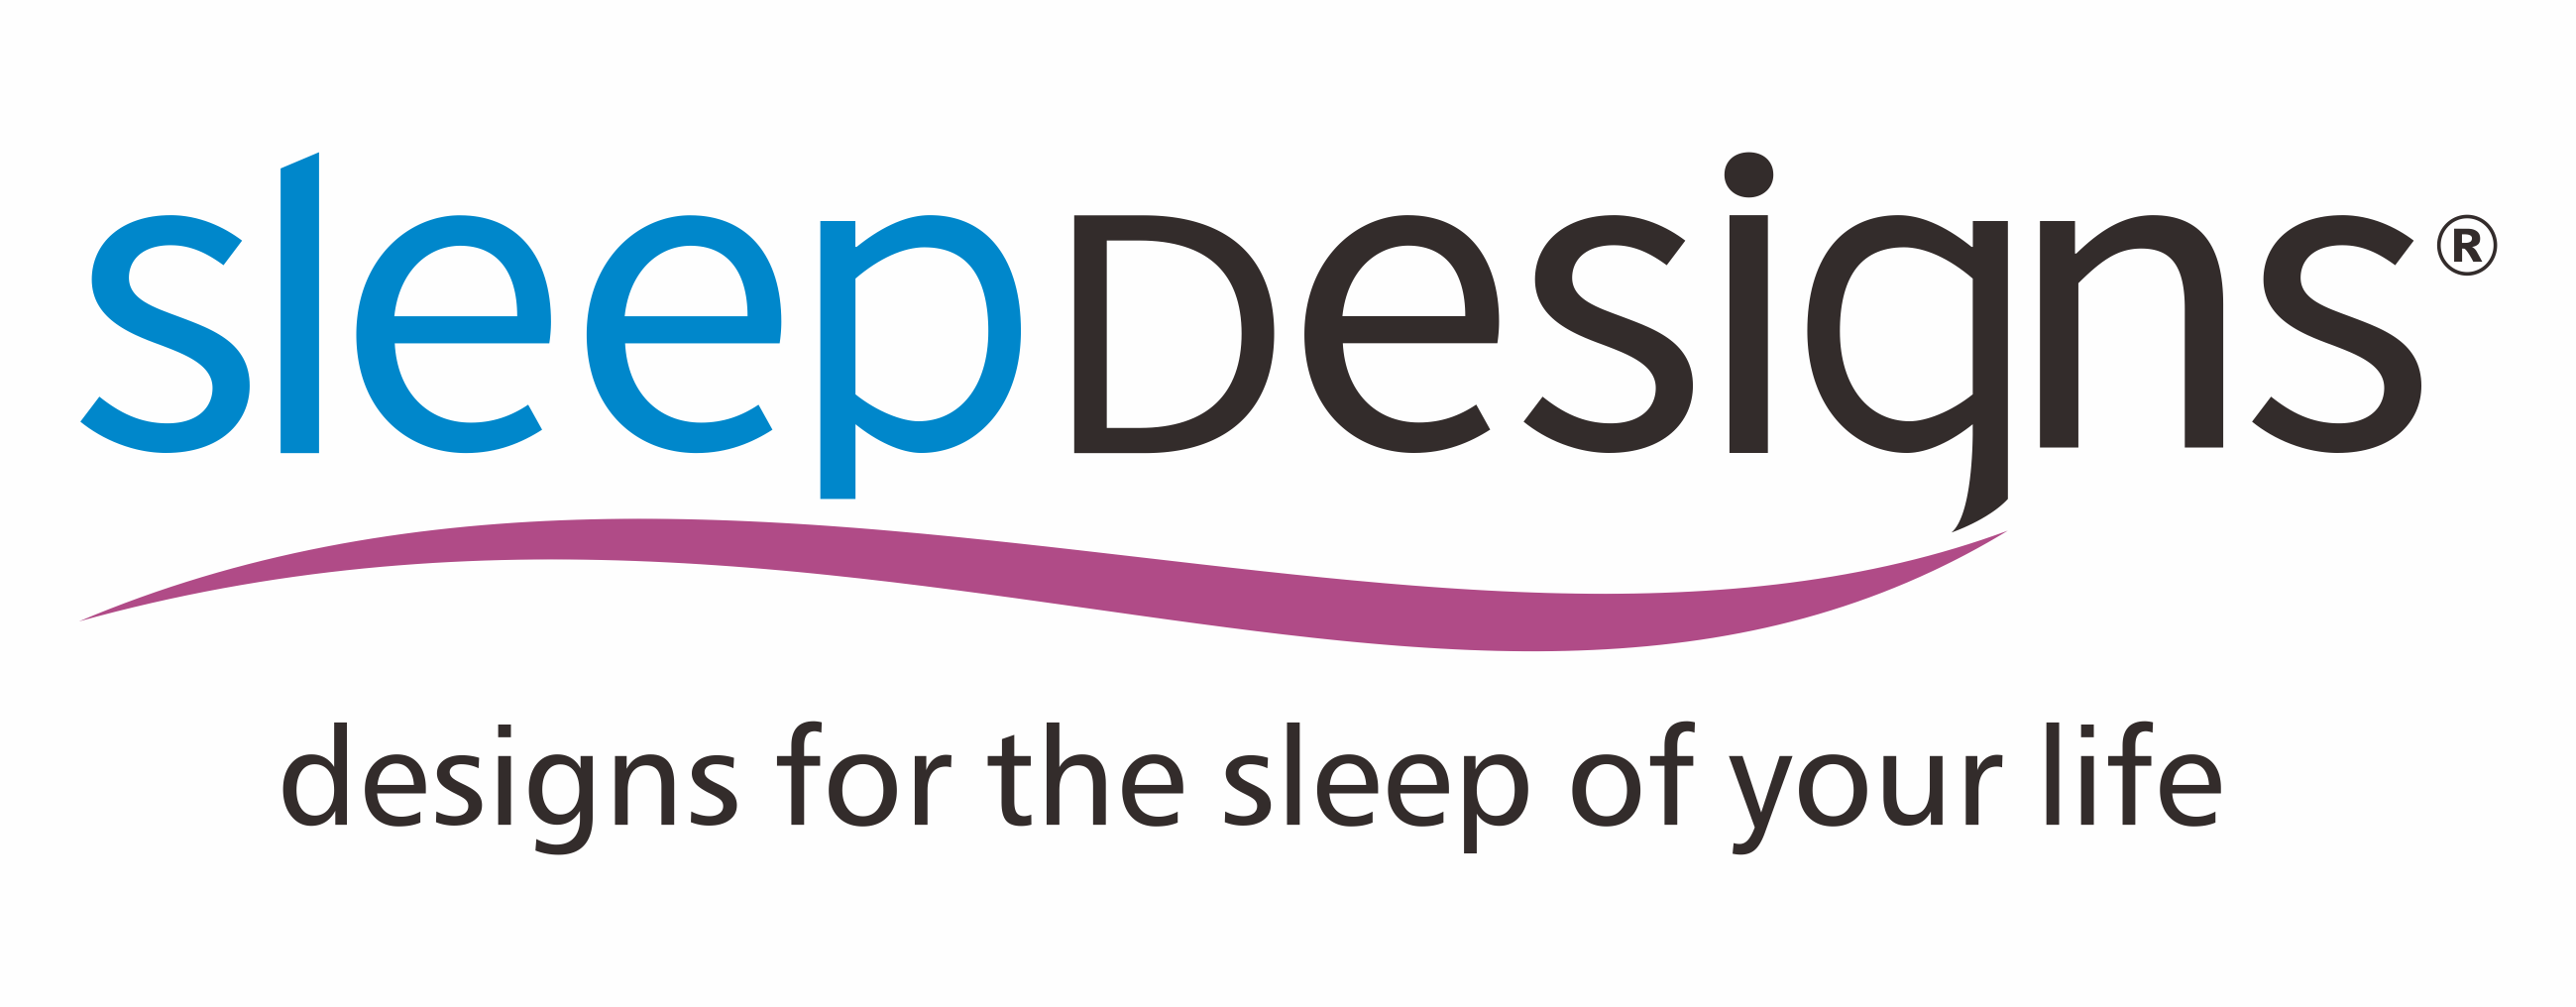 Sleepdesigns美国官网